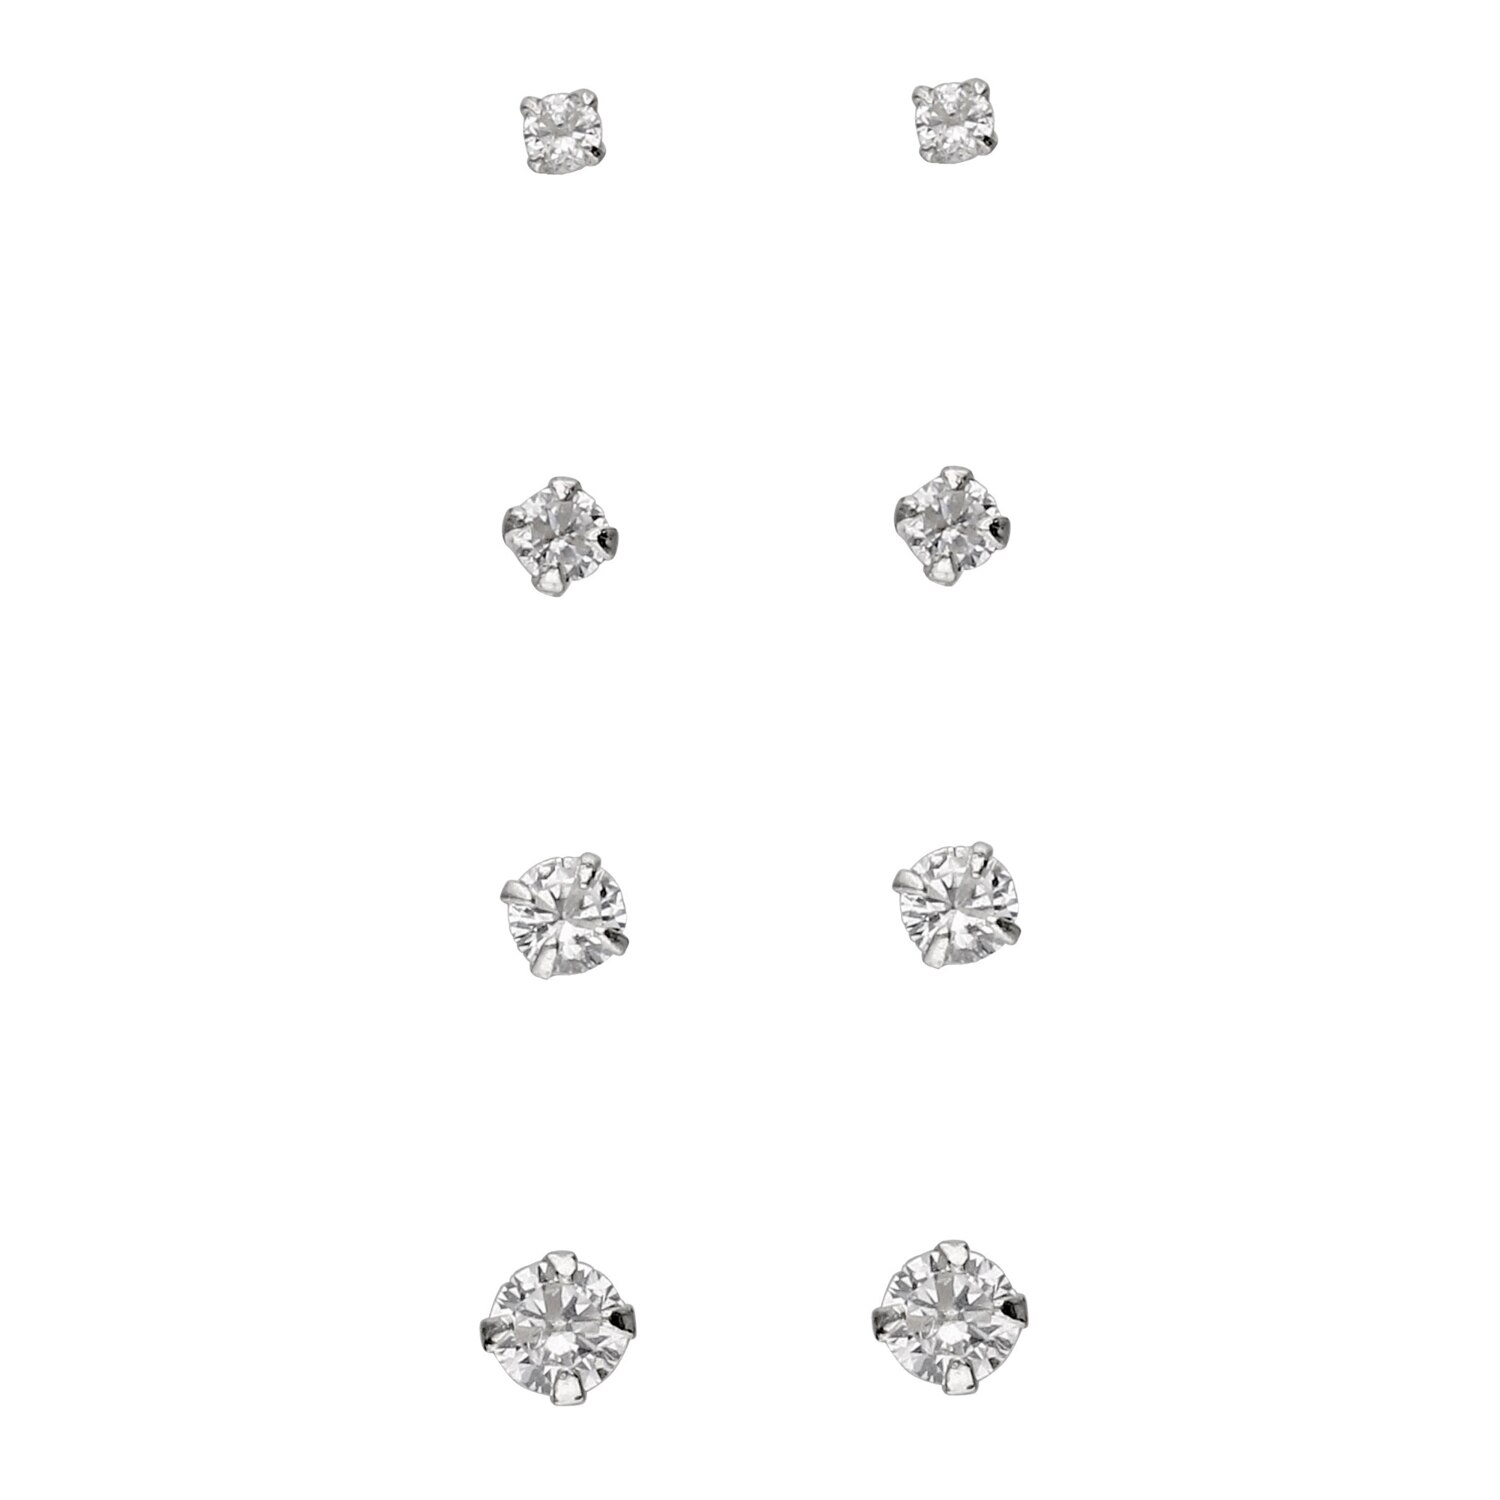 I AM Jewelry Silver Zirconia Stud Earring Set, 8CT , CVS